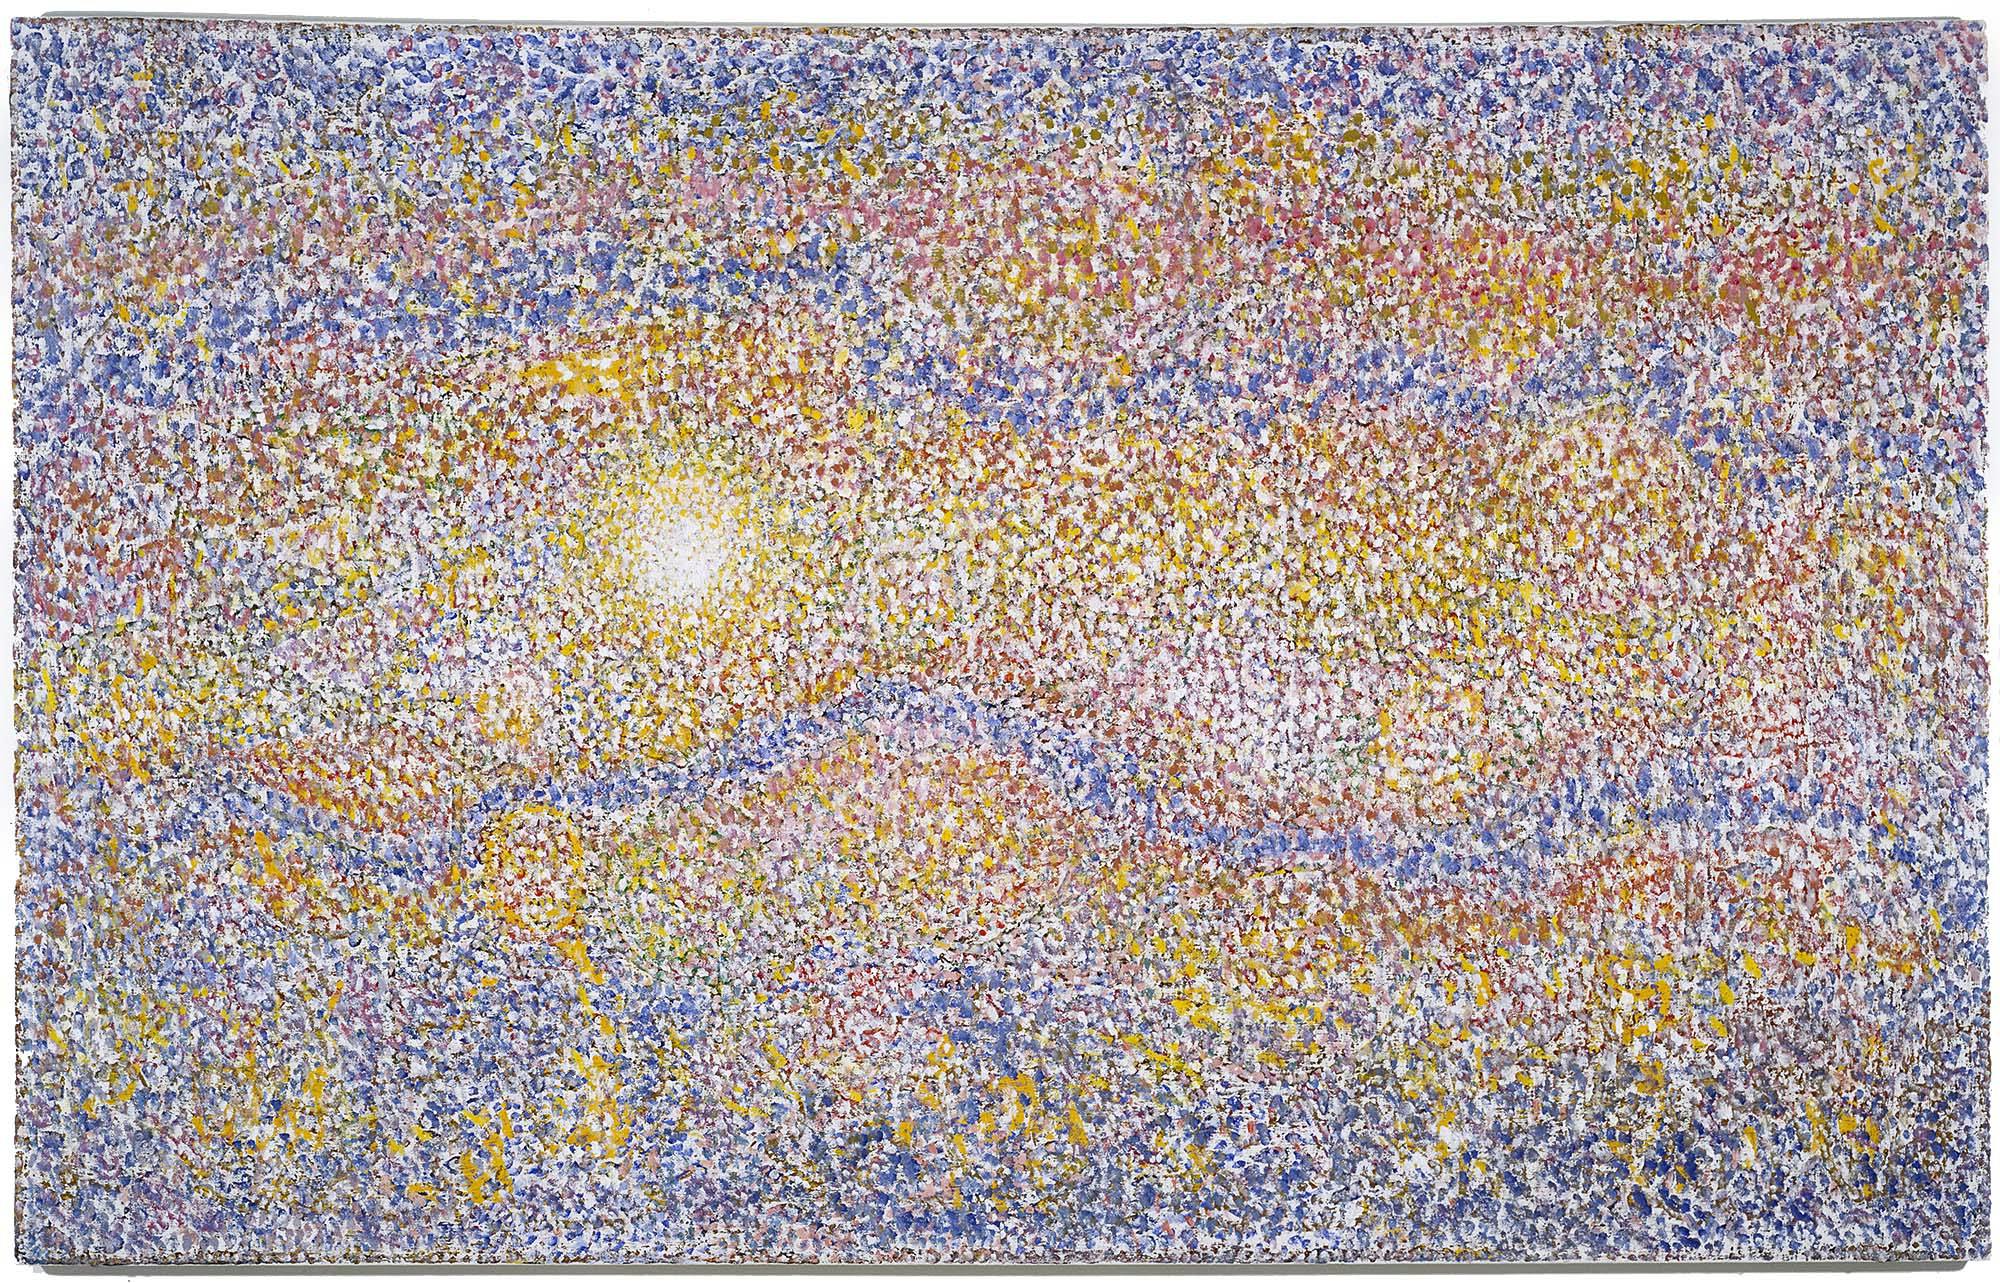 Ramapo Light
1990–91
Acrylic on linen
50 x 80 in. (127 x 203.2 cm)
 – The Richard Pousette-Dart Foundation